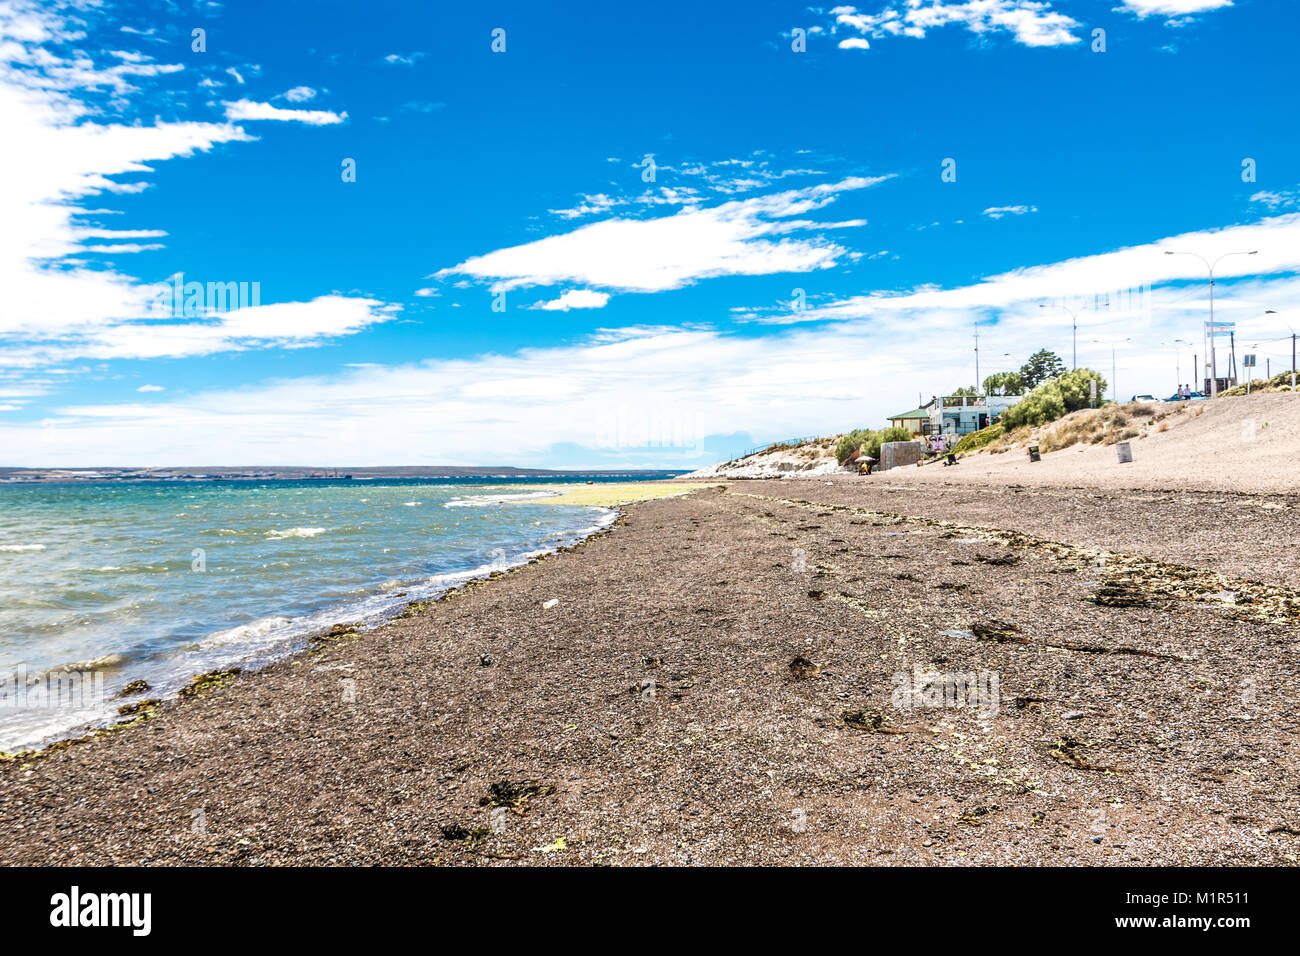 Puerto Madryn beach, sun, waves and sand, beautiful day Stock Photo